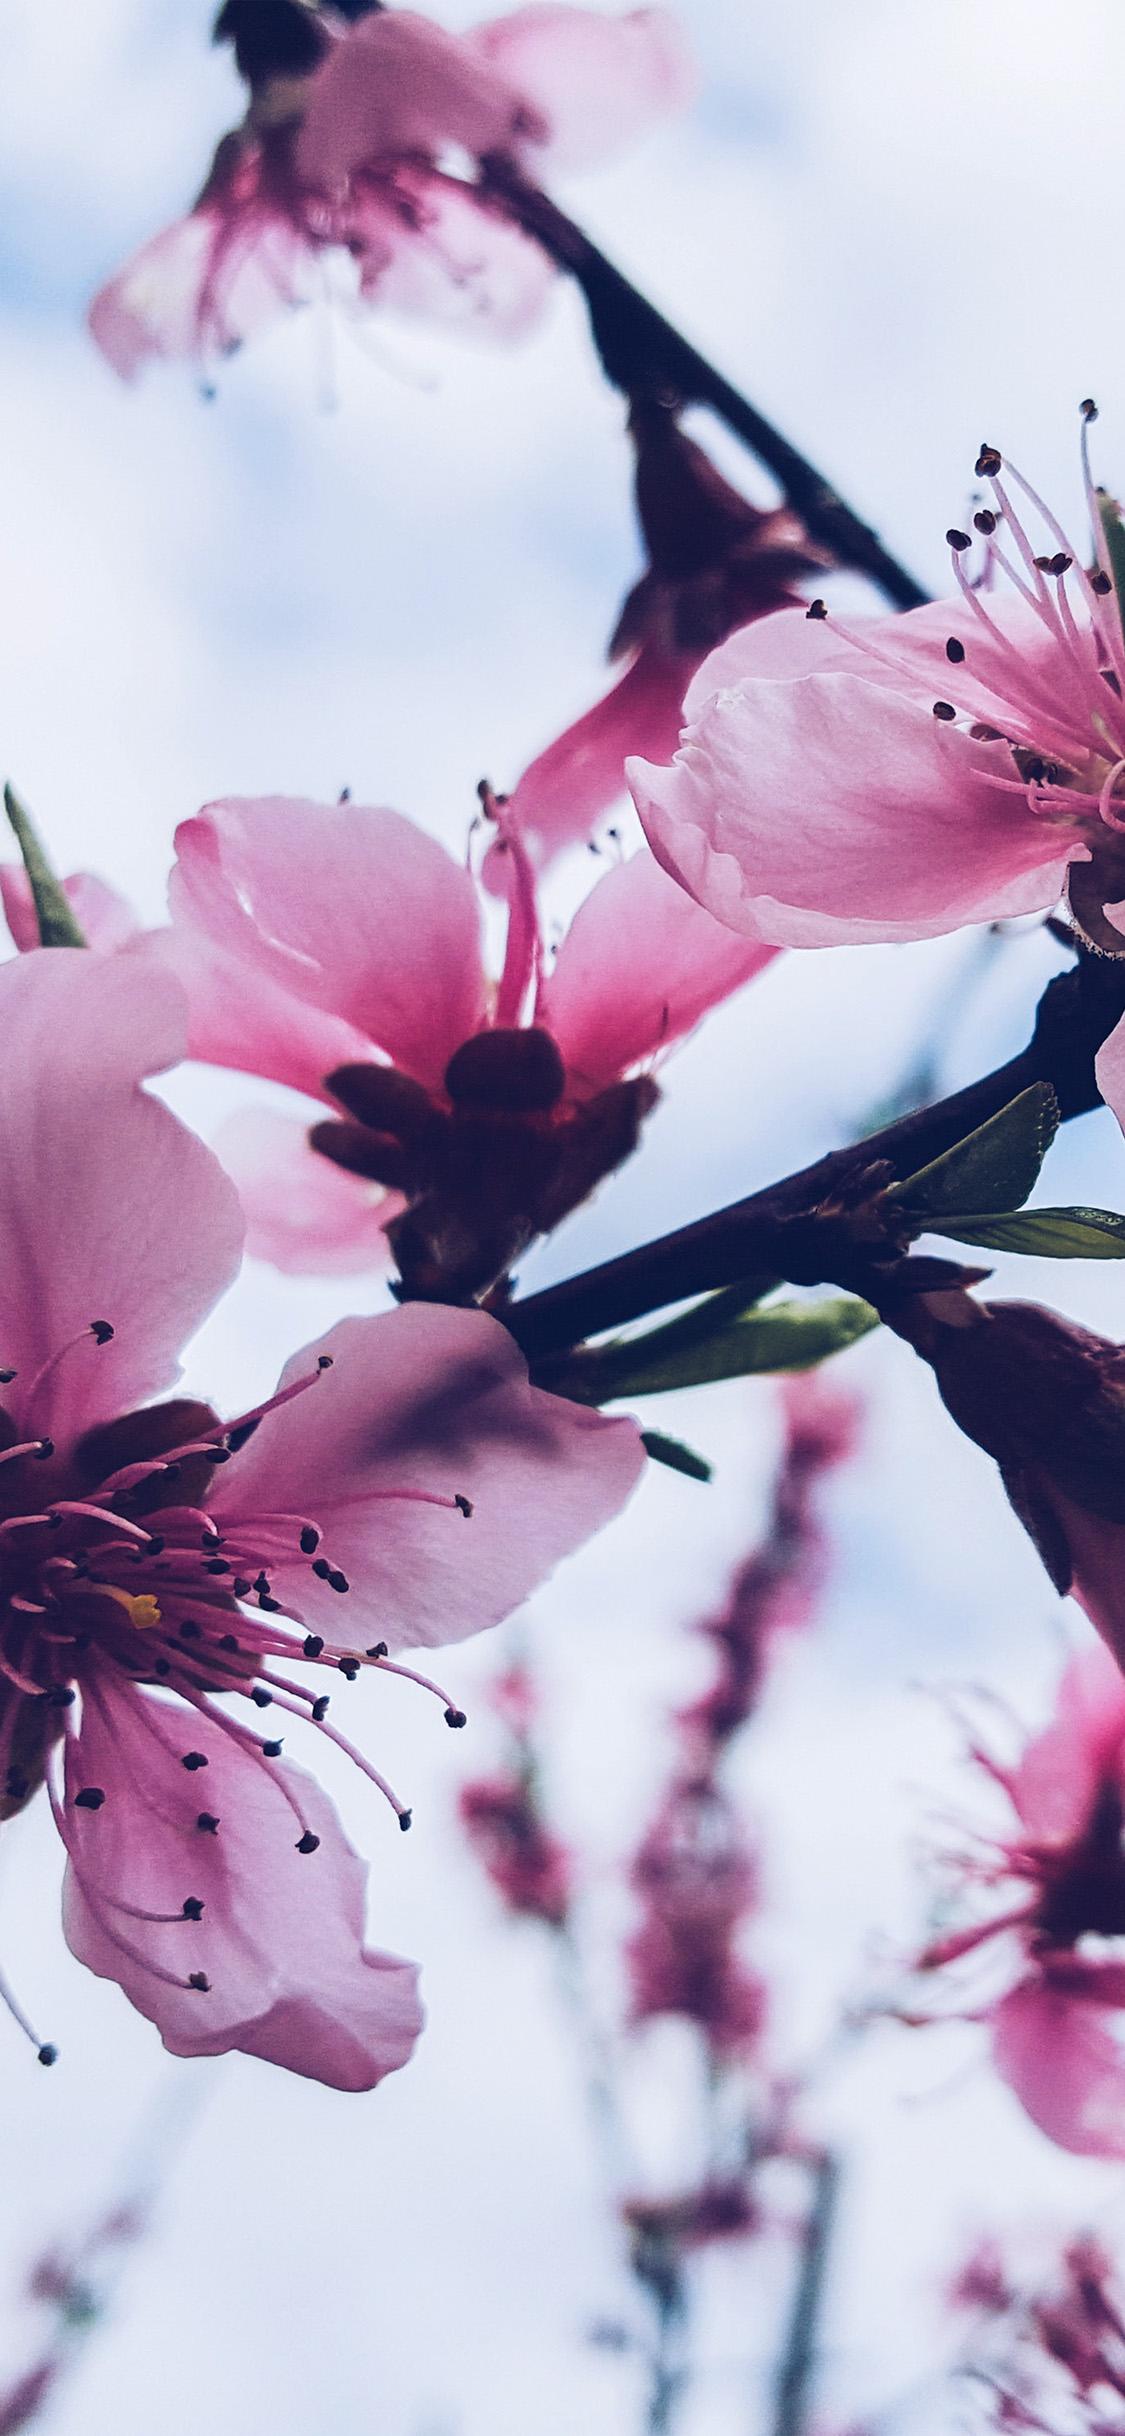 iPhone wallpaper. flower blossom cherry